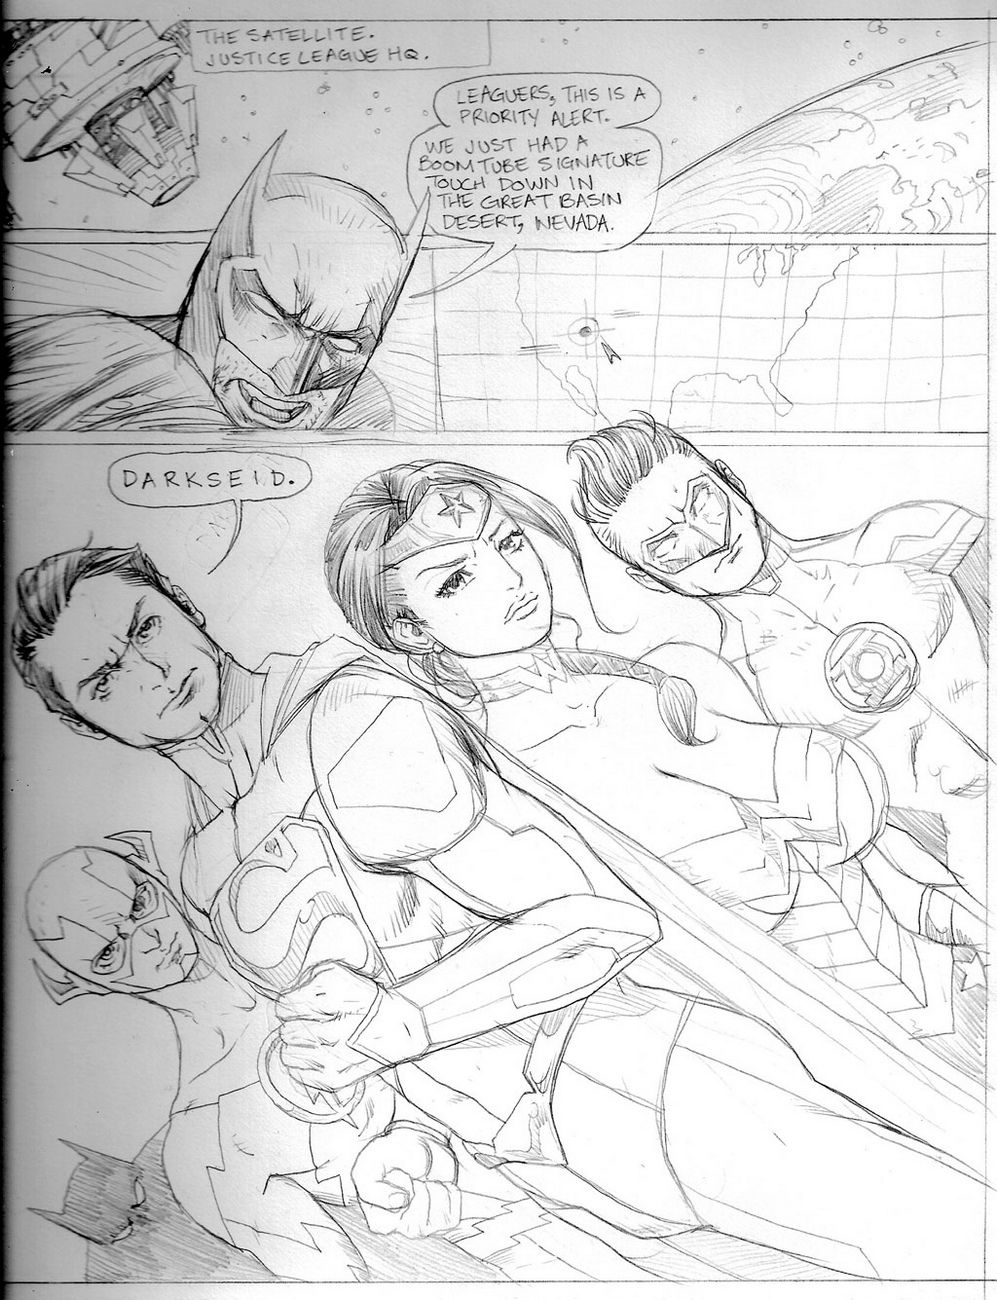 Whores Of Darkseid 1 - Wonder Woman page 2